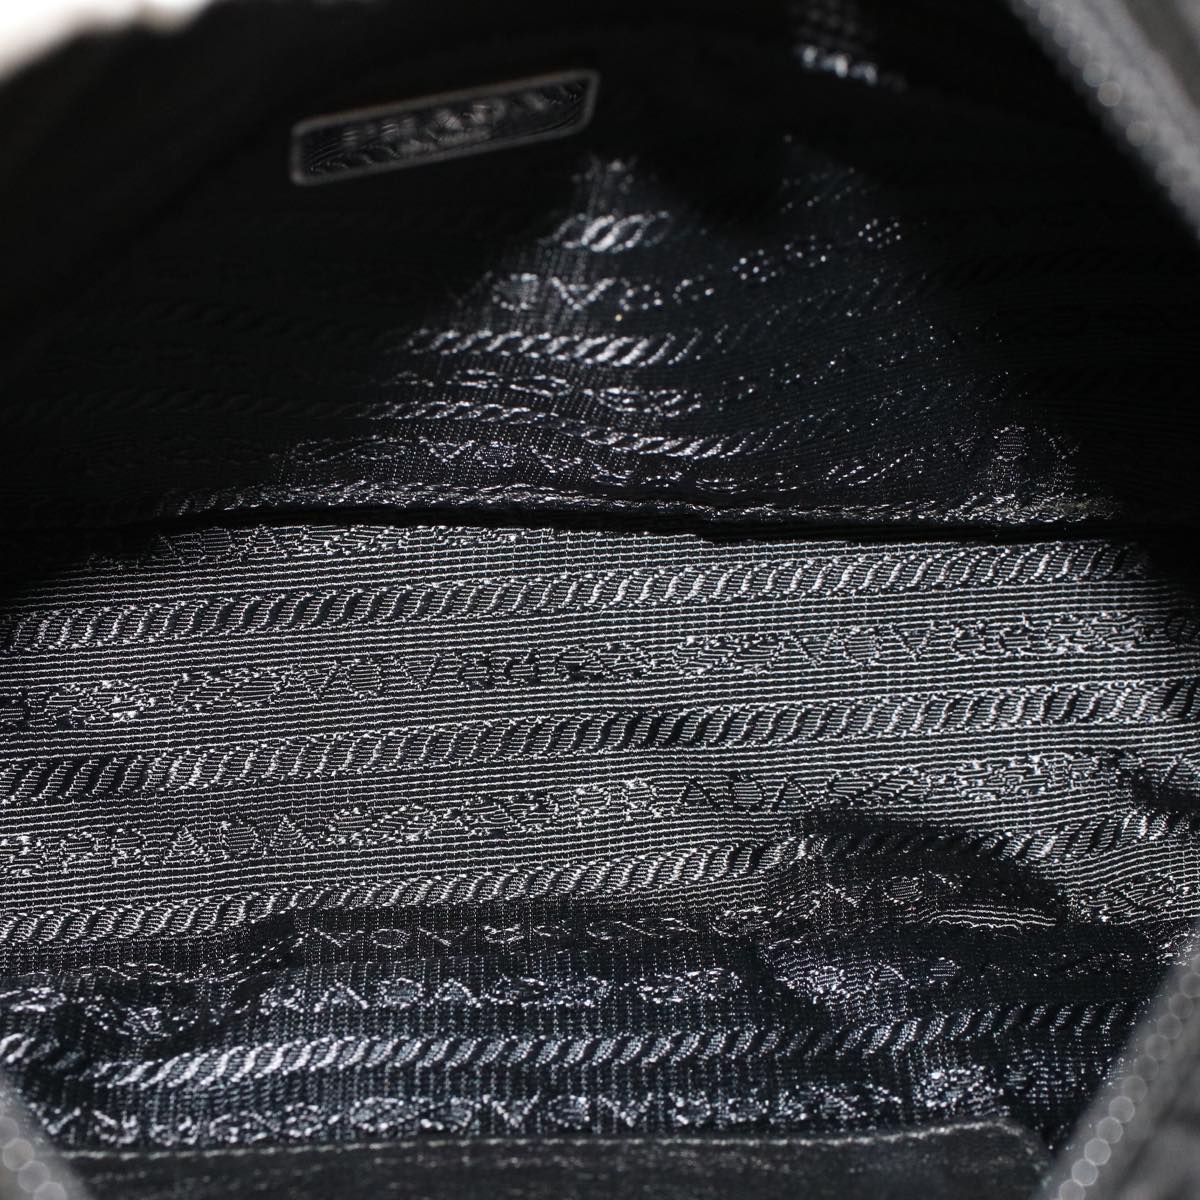 Prada Black Synthetic Tessuto Shoulder Bag